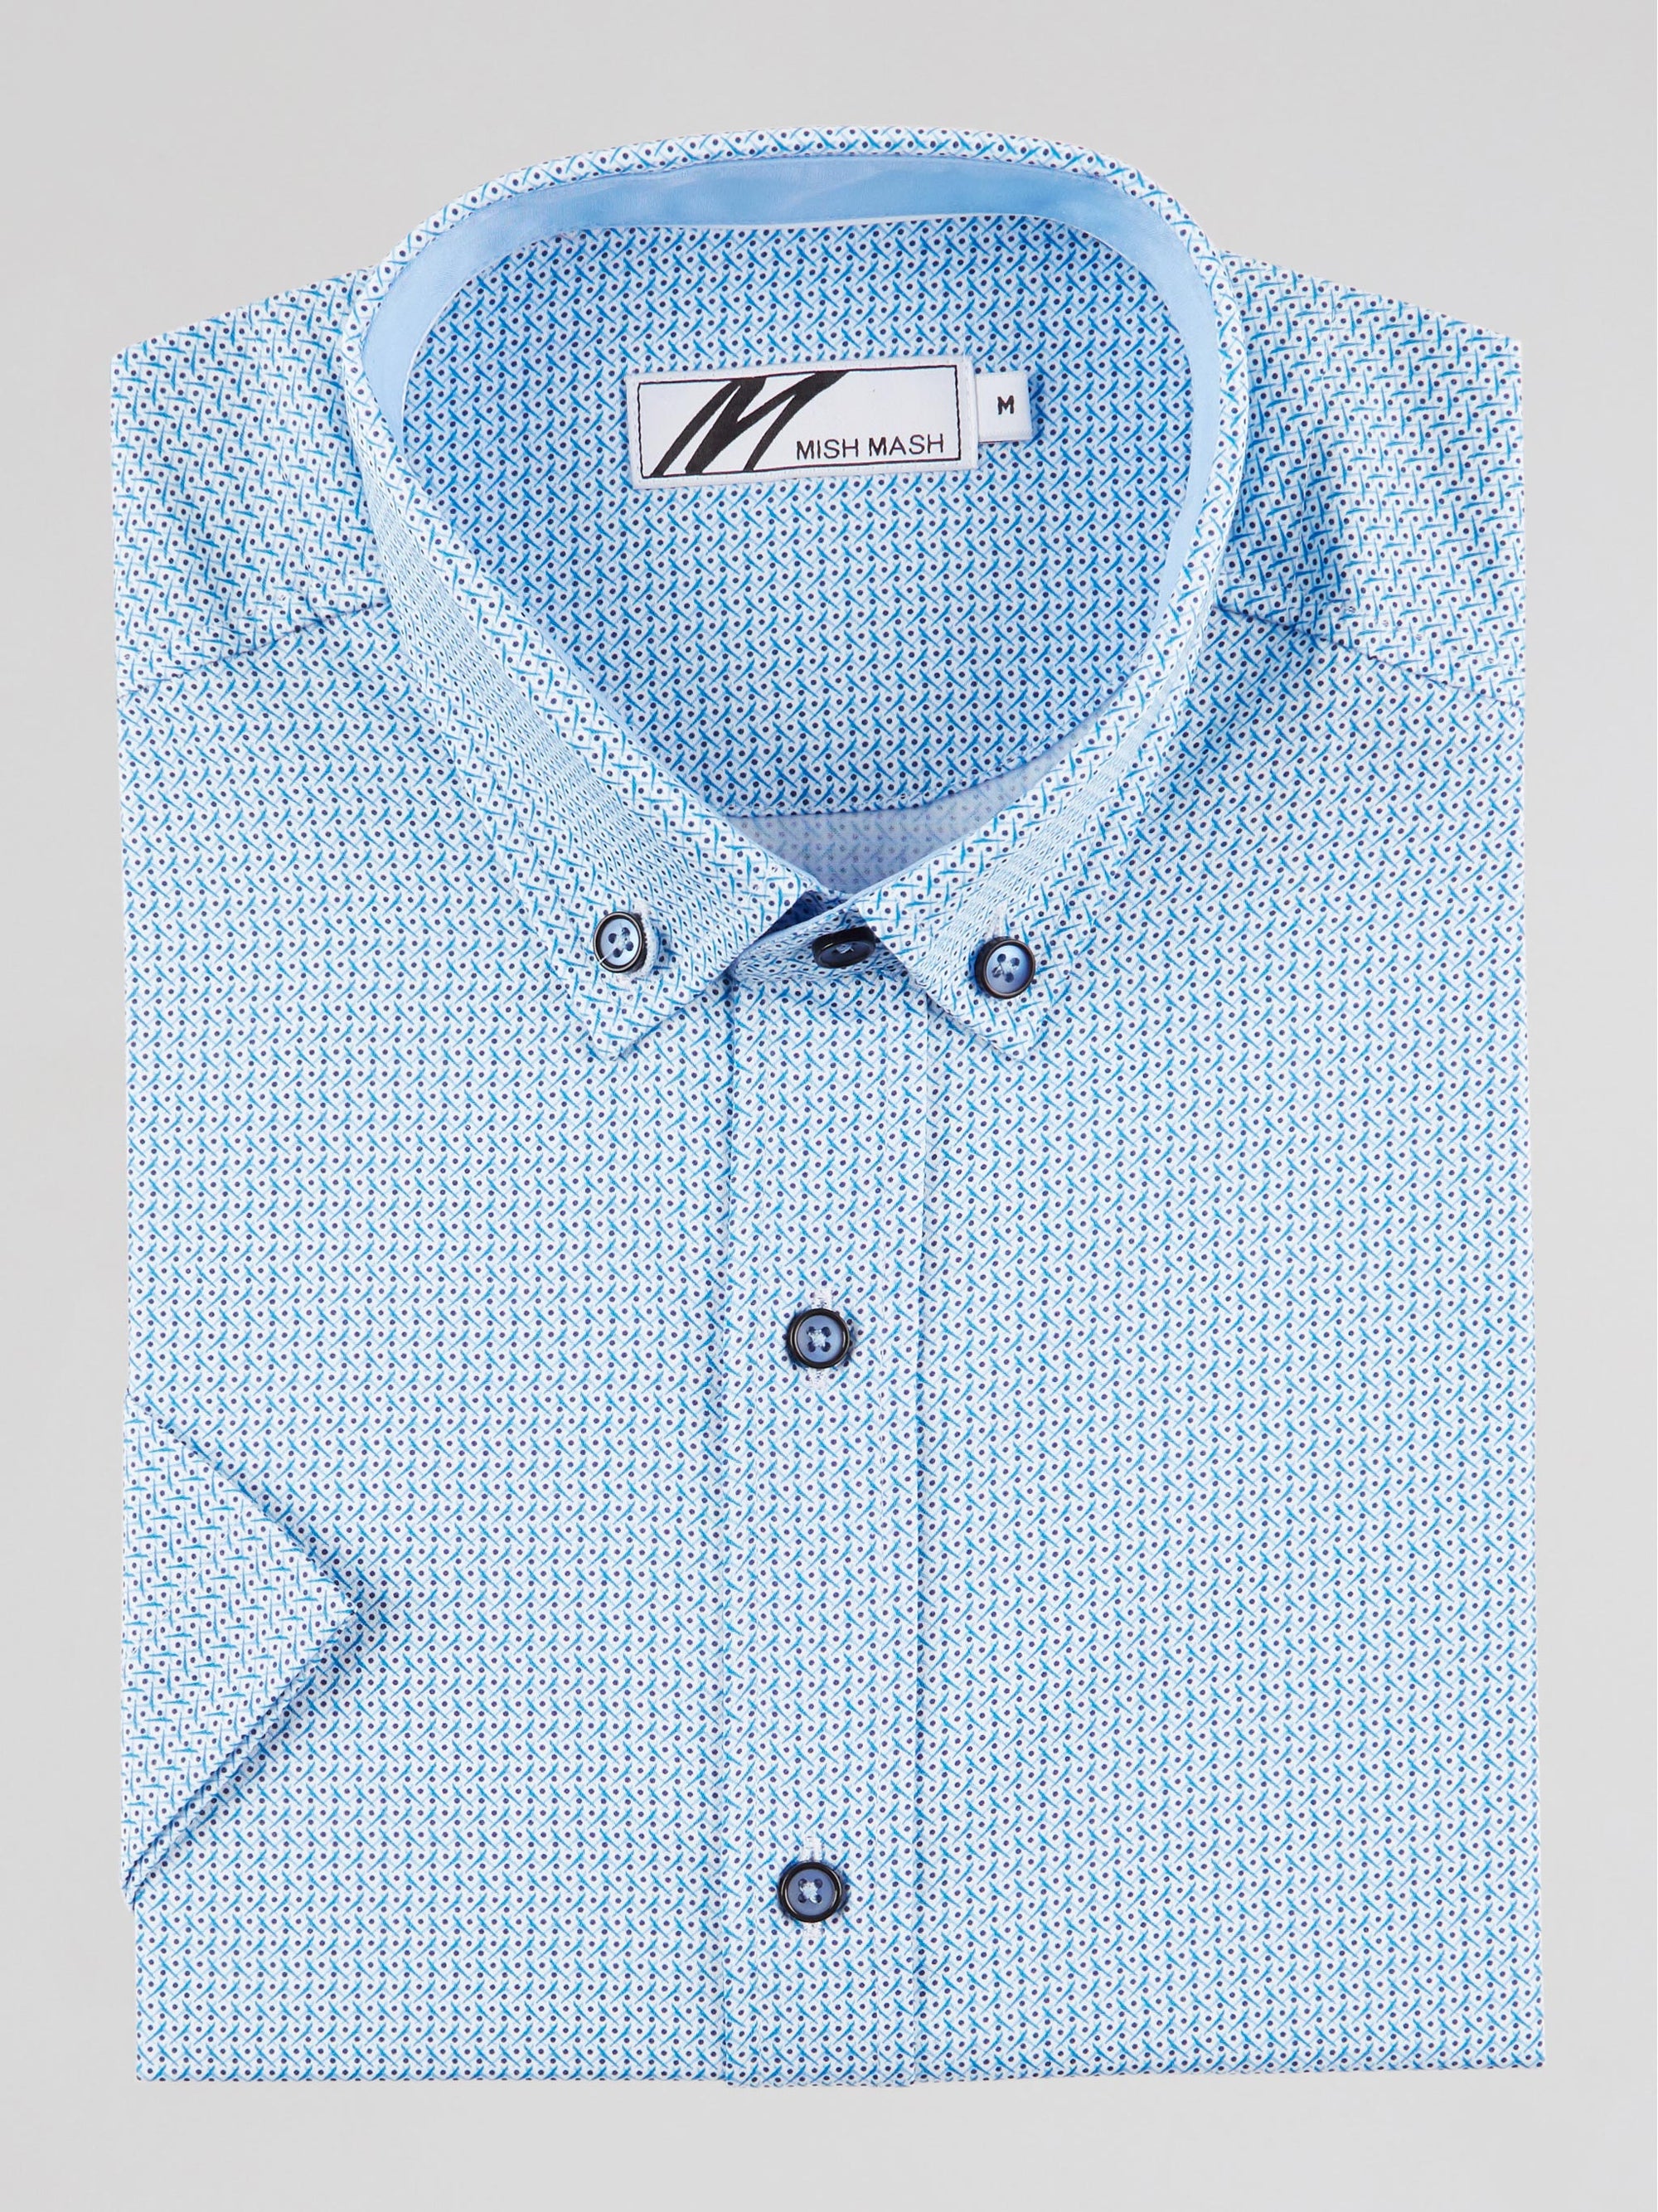 coastal-white-blue-printed-mens-cotton-short-sleeve-shirt-mish-mash